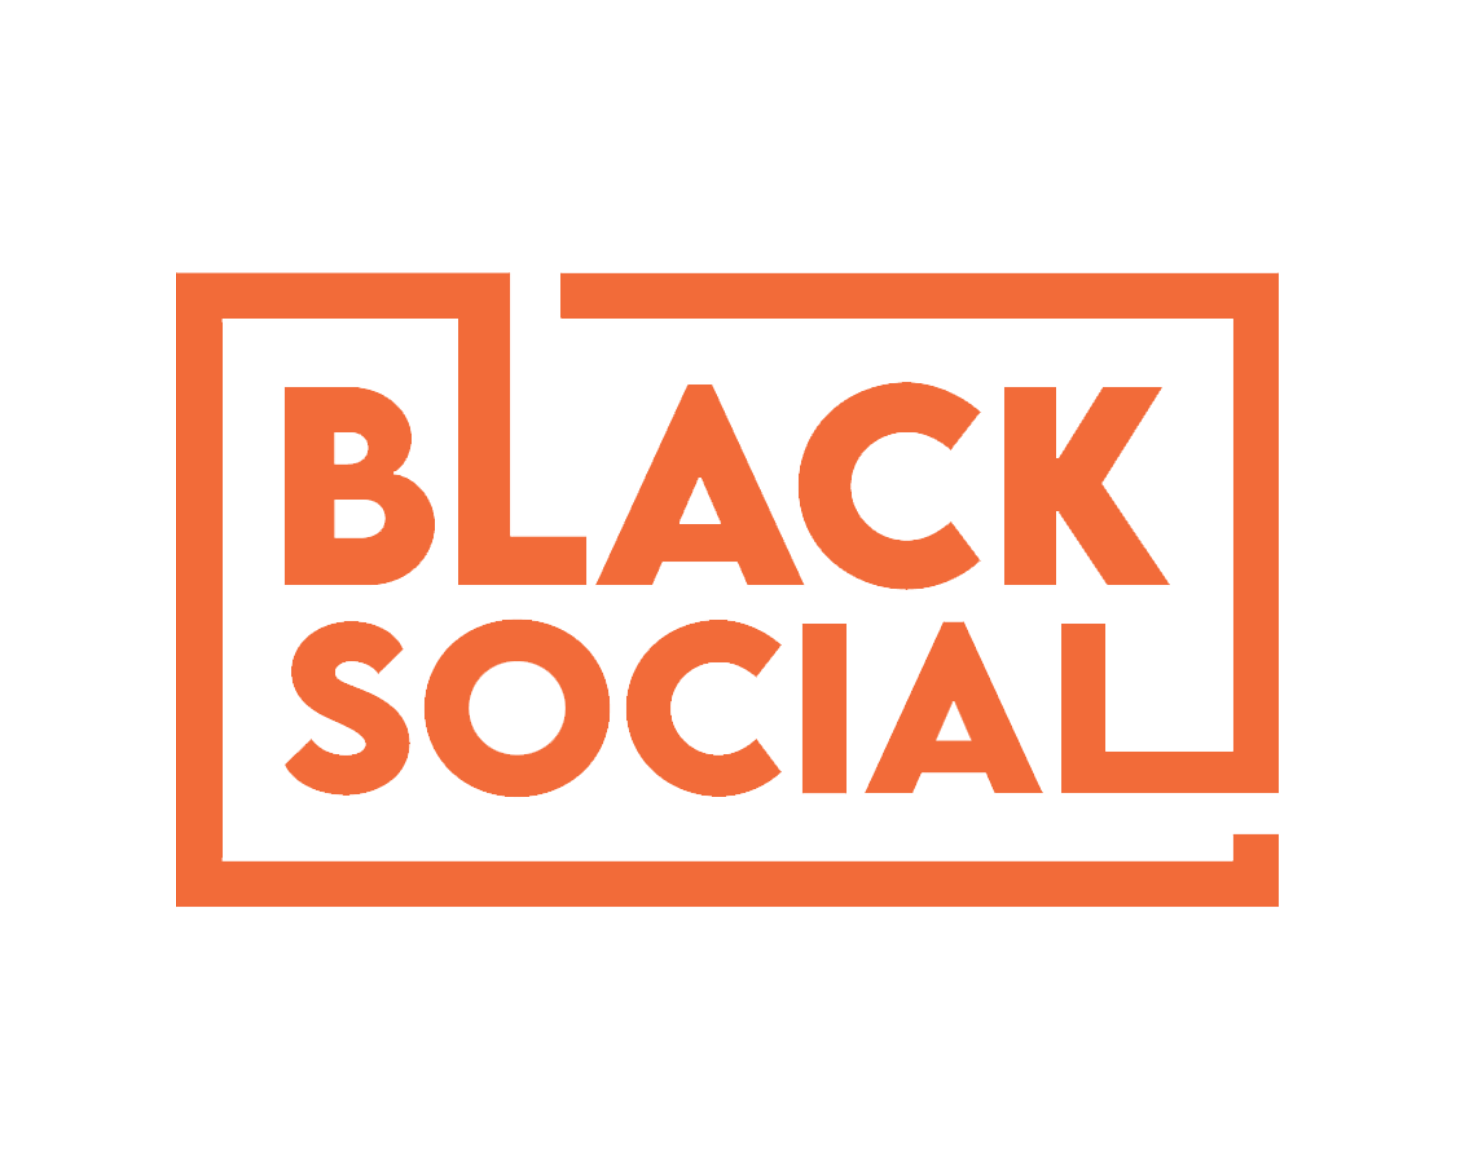 black soical app logo